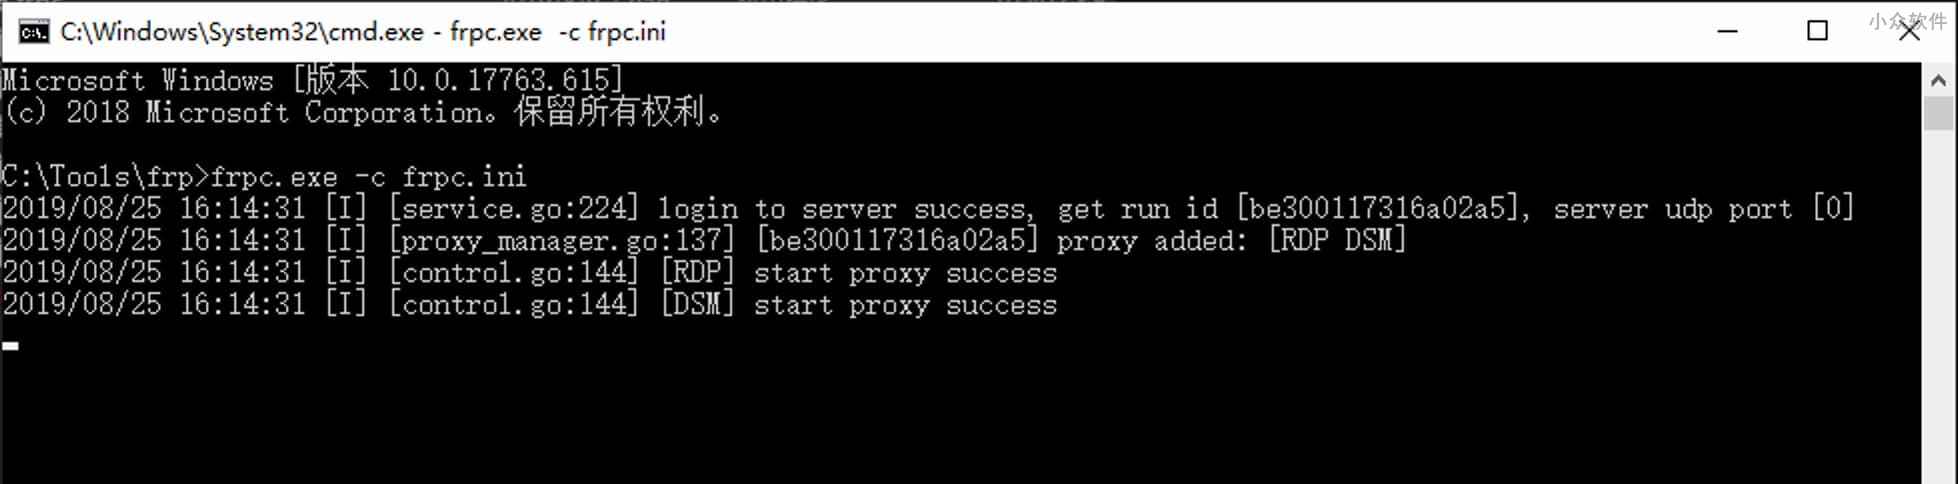 EasyService - 让程序以 Windows 系统服务的方式，无窗口运行 2